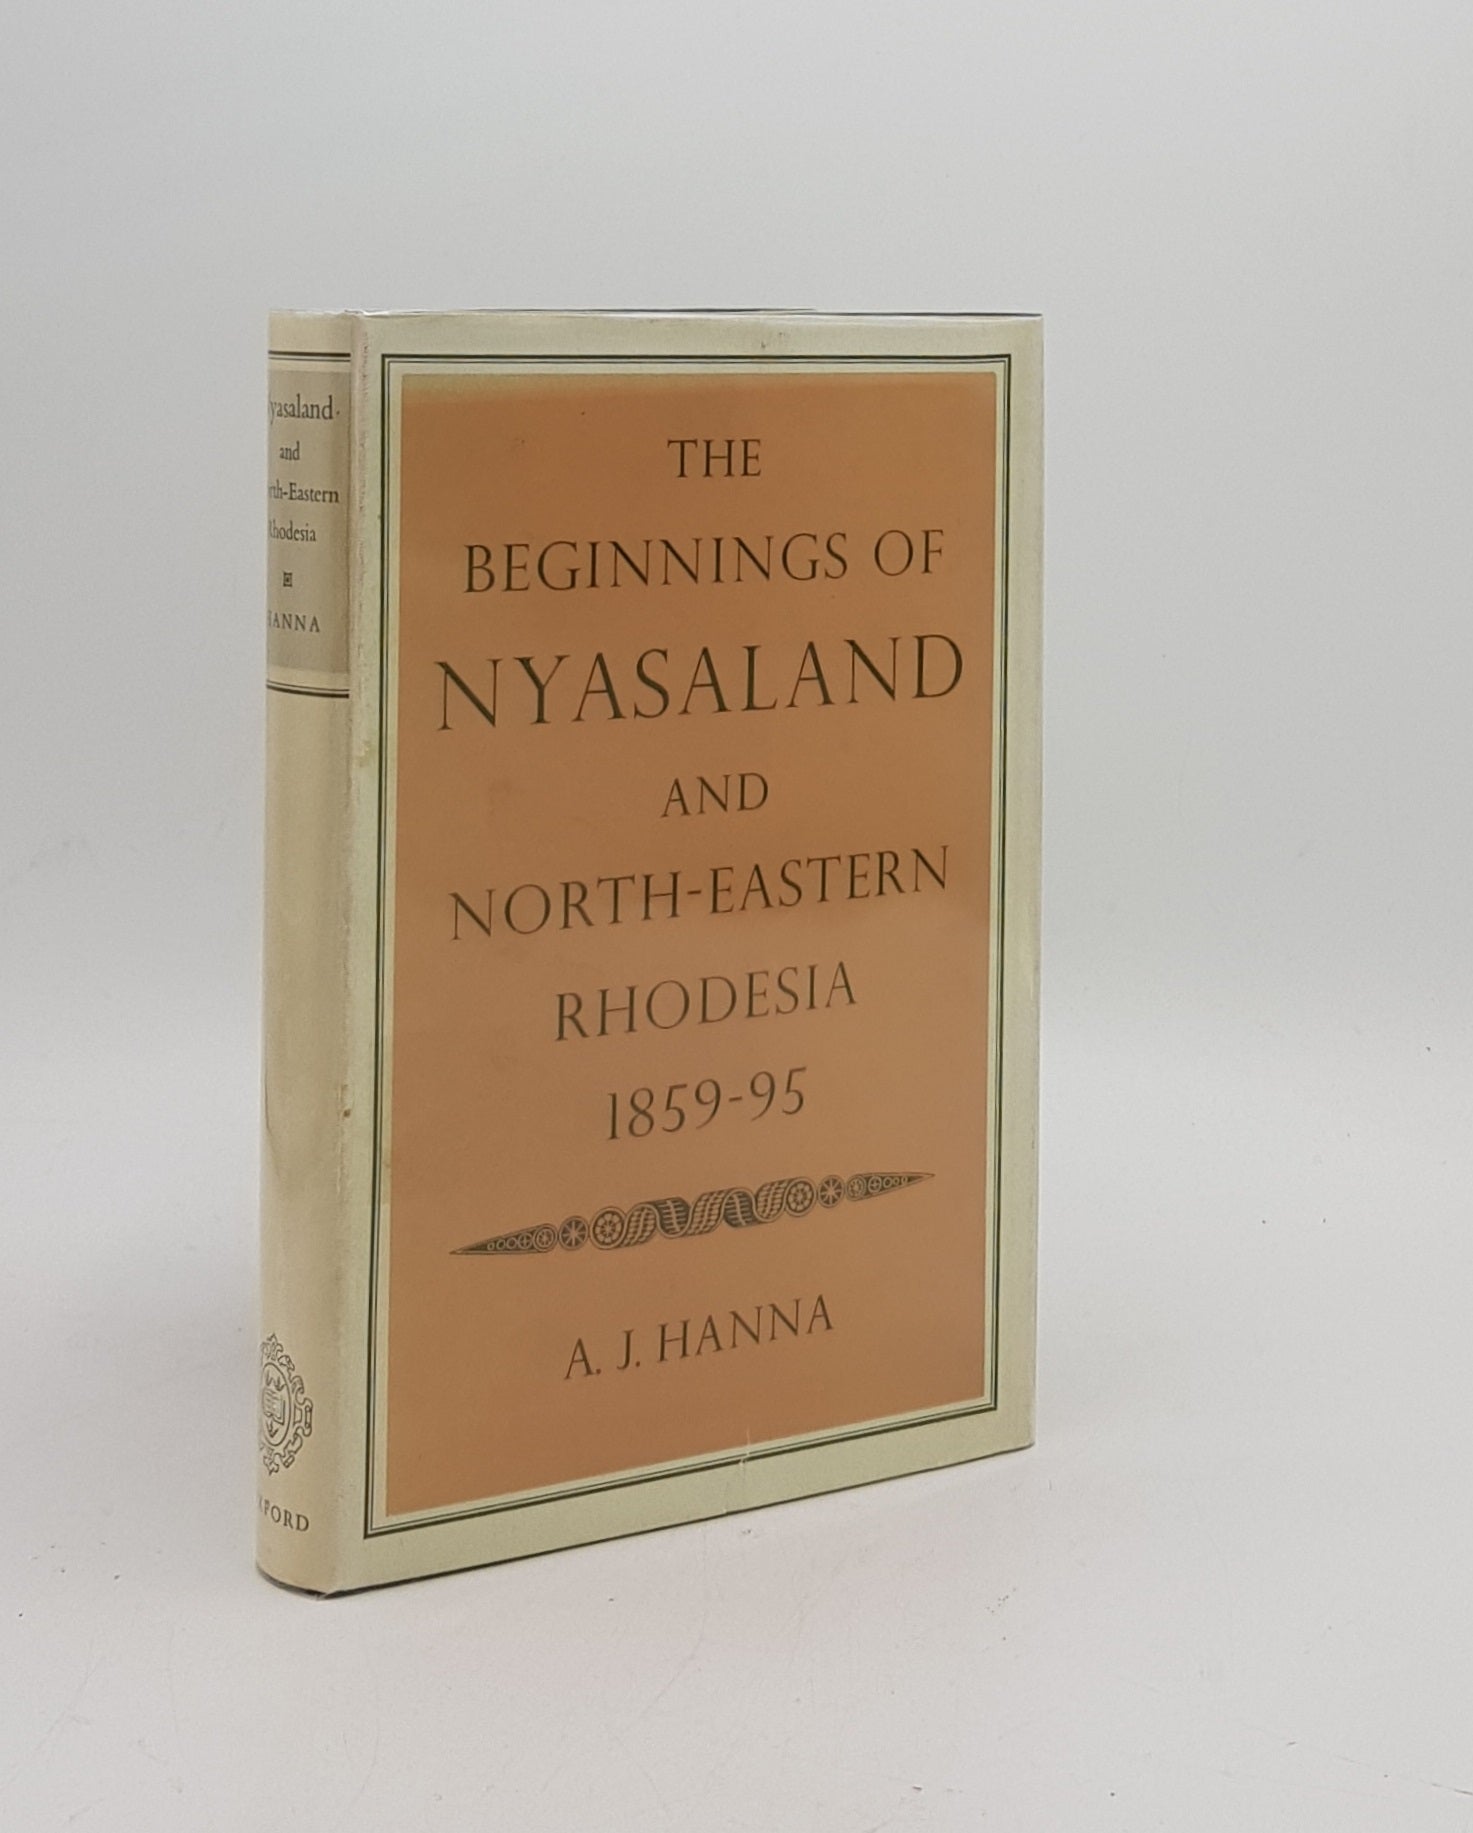 HANNA A.J. - The Beginnings of Nyasaland and North-Eastern Rhodesia 1859-95